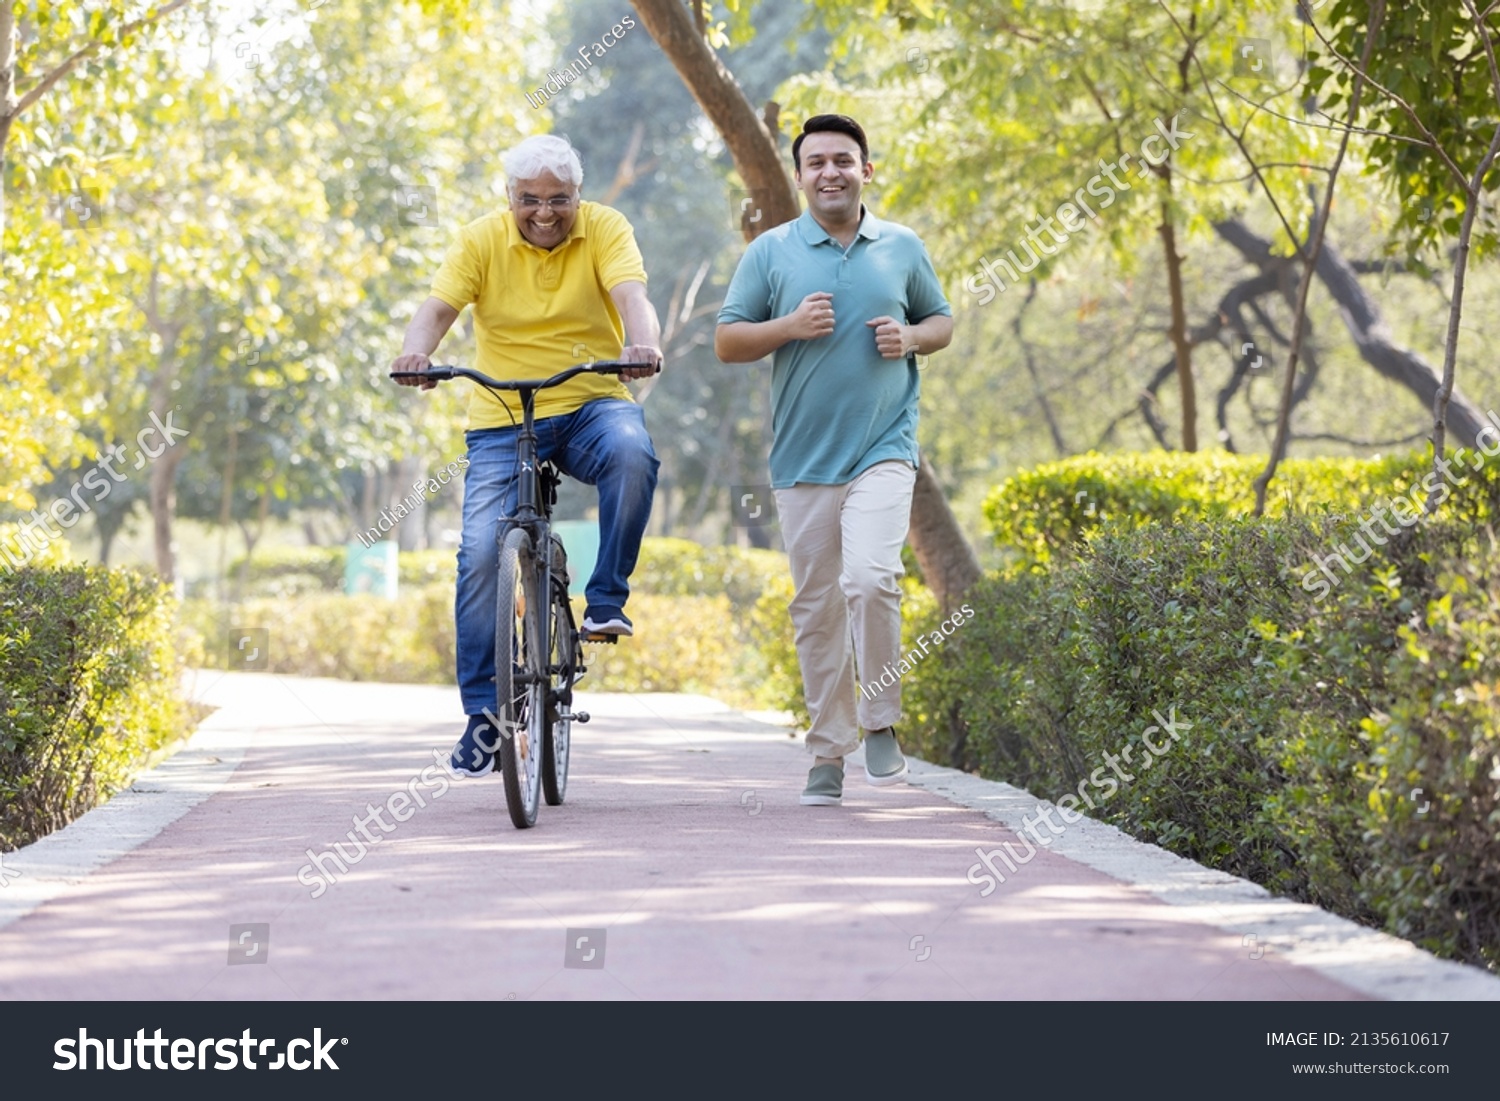 Cheerful senior man riding bicycle  while son running at park
 #2135610617